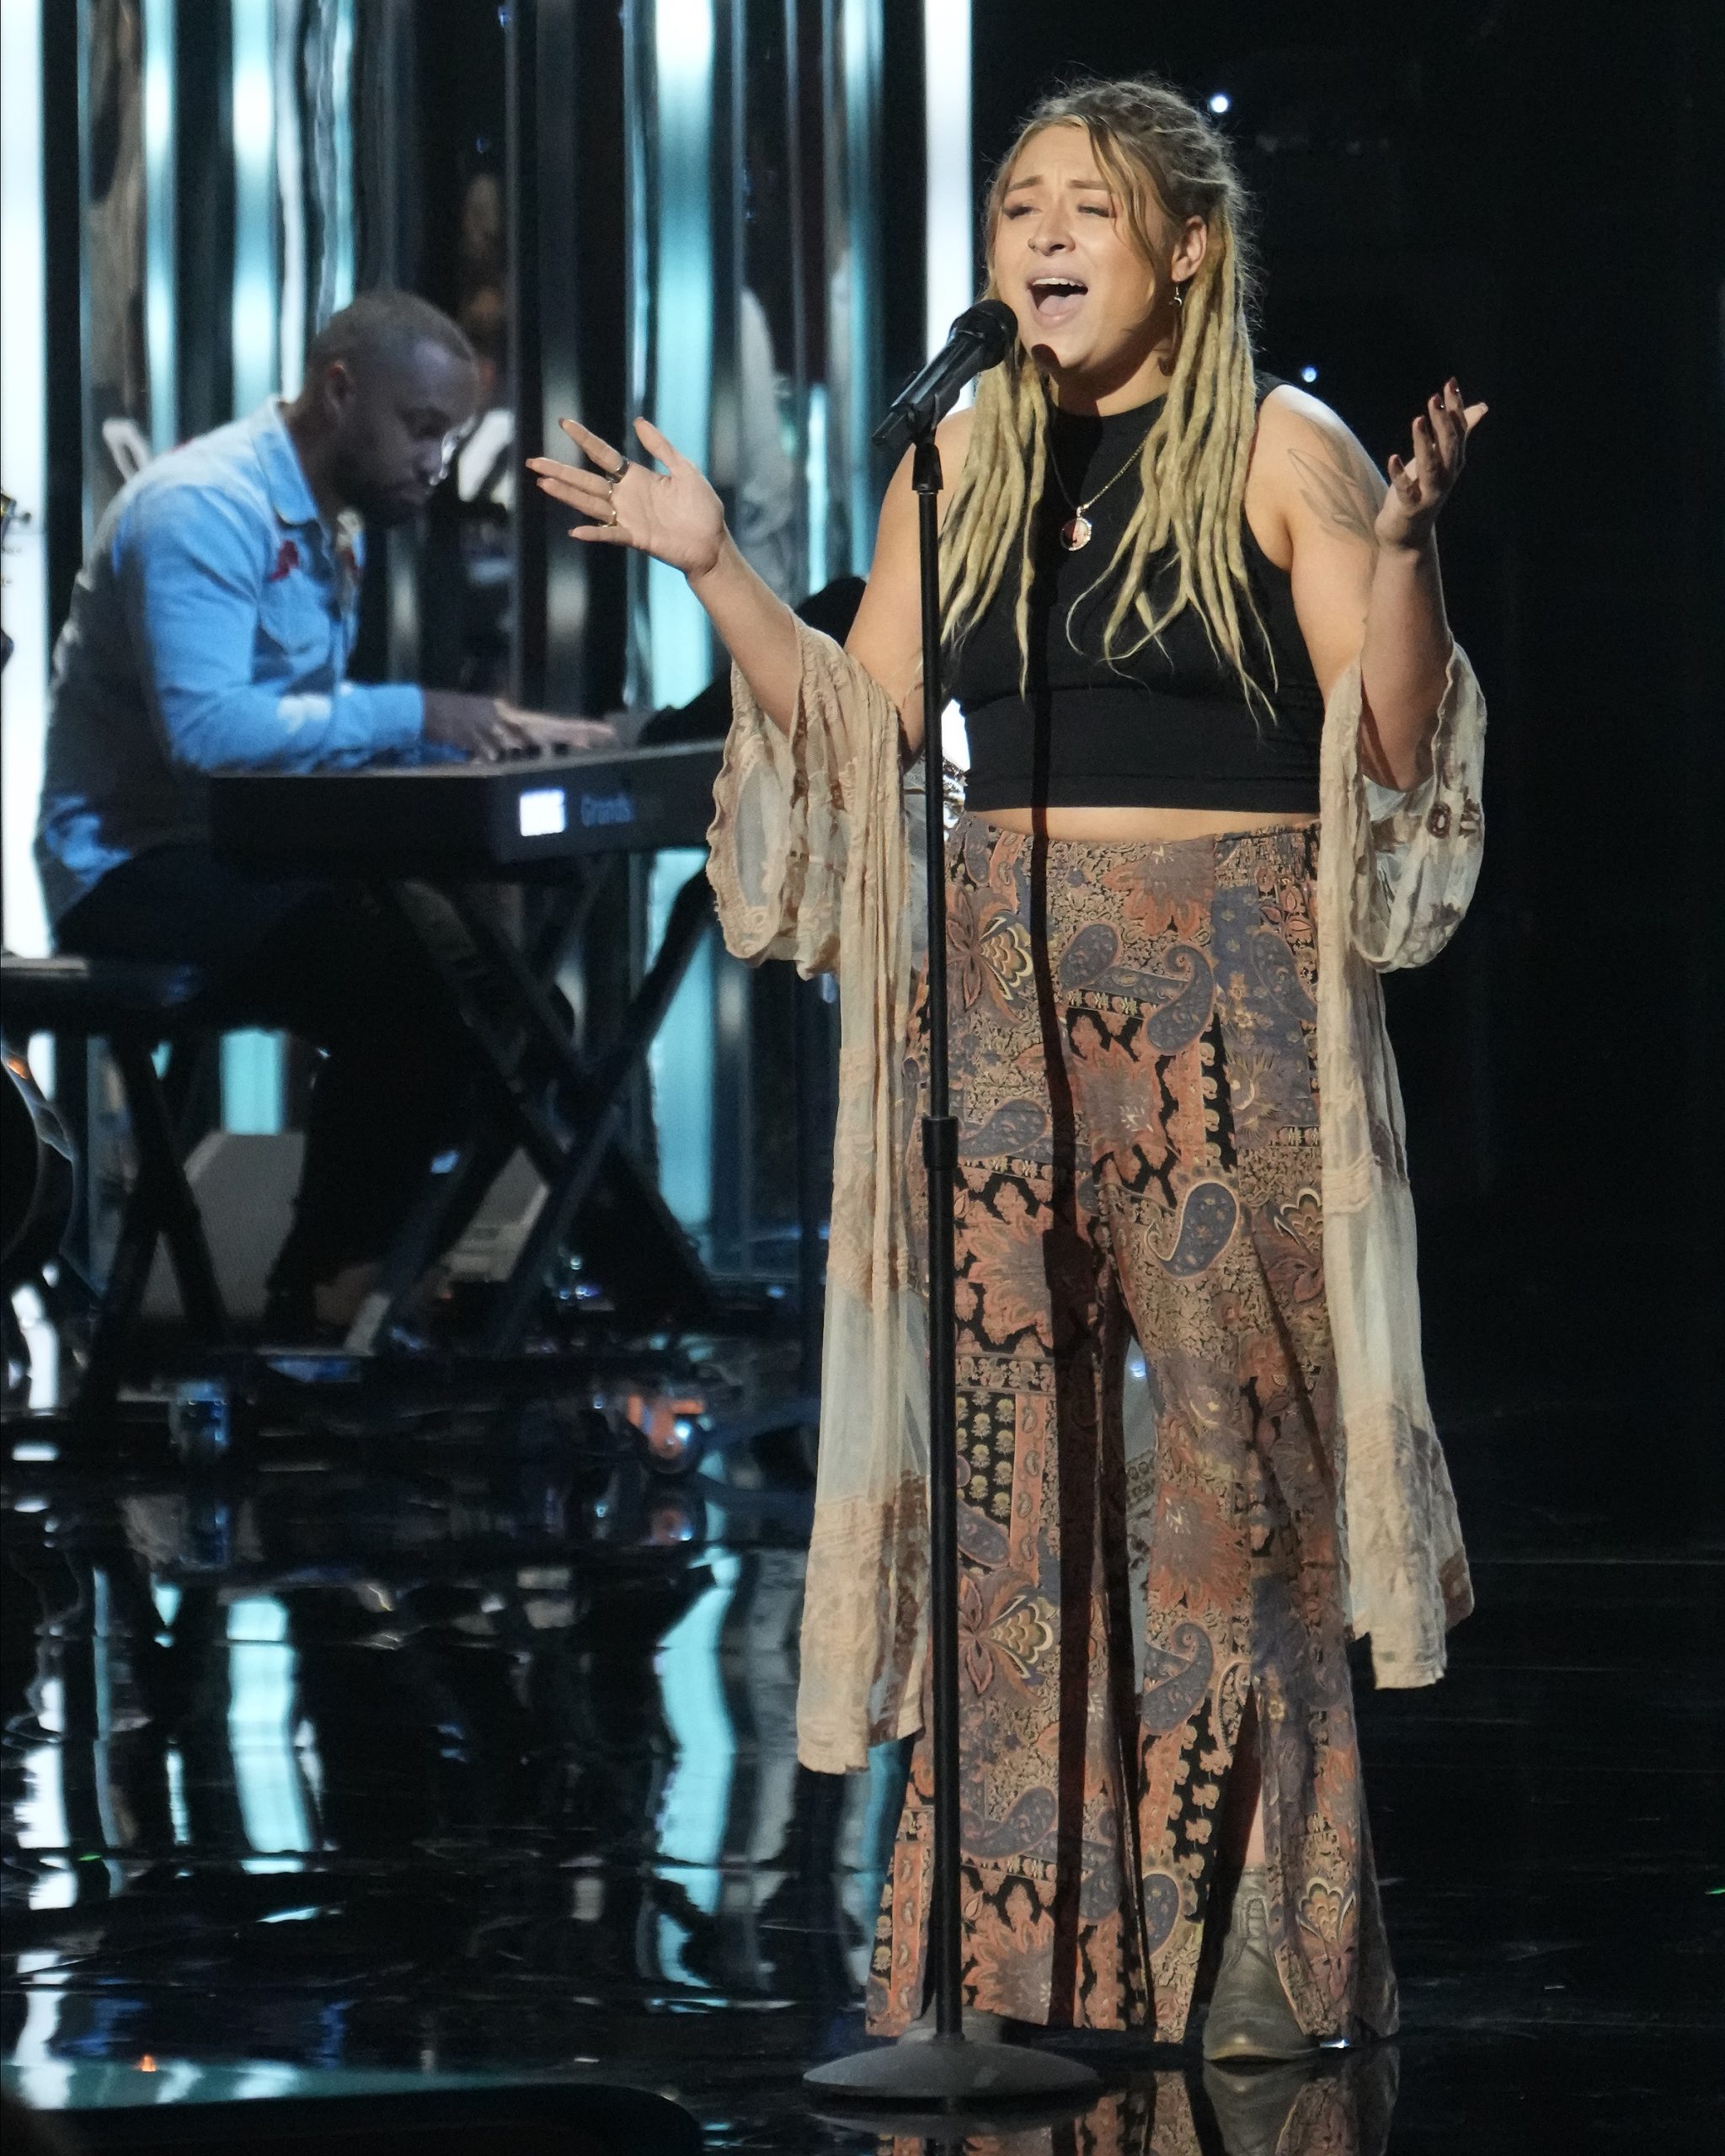 MARIAH FAITH on American Idol